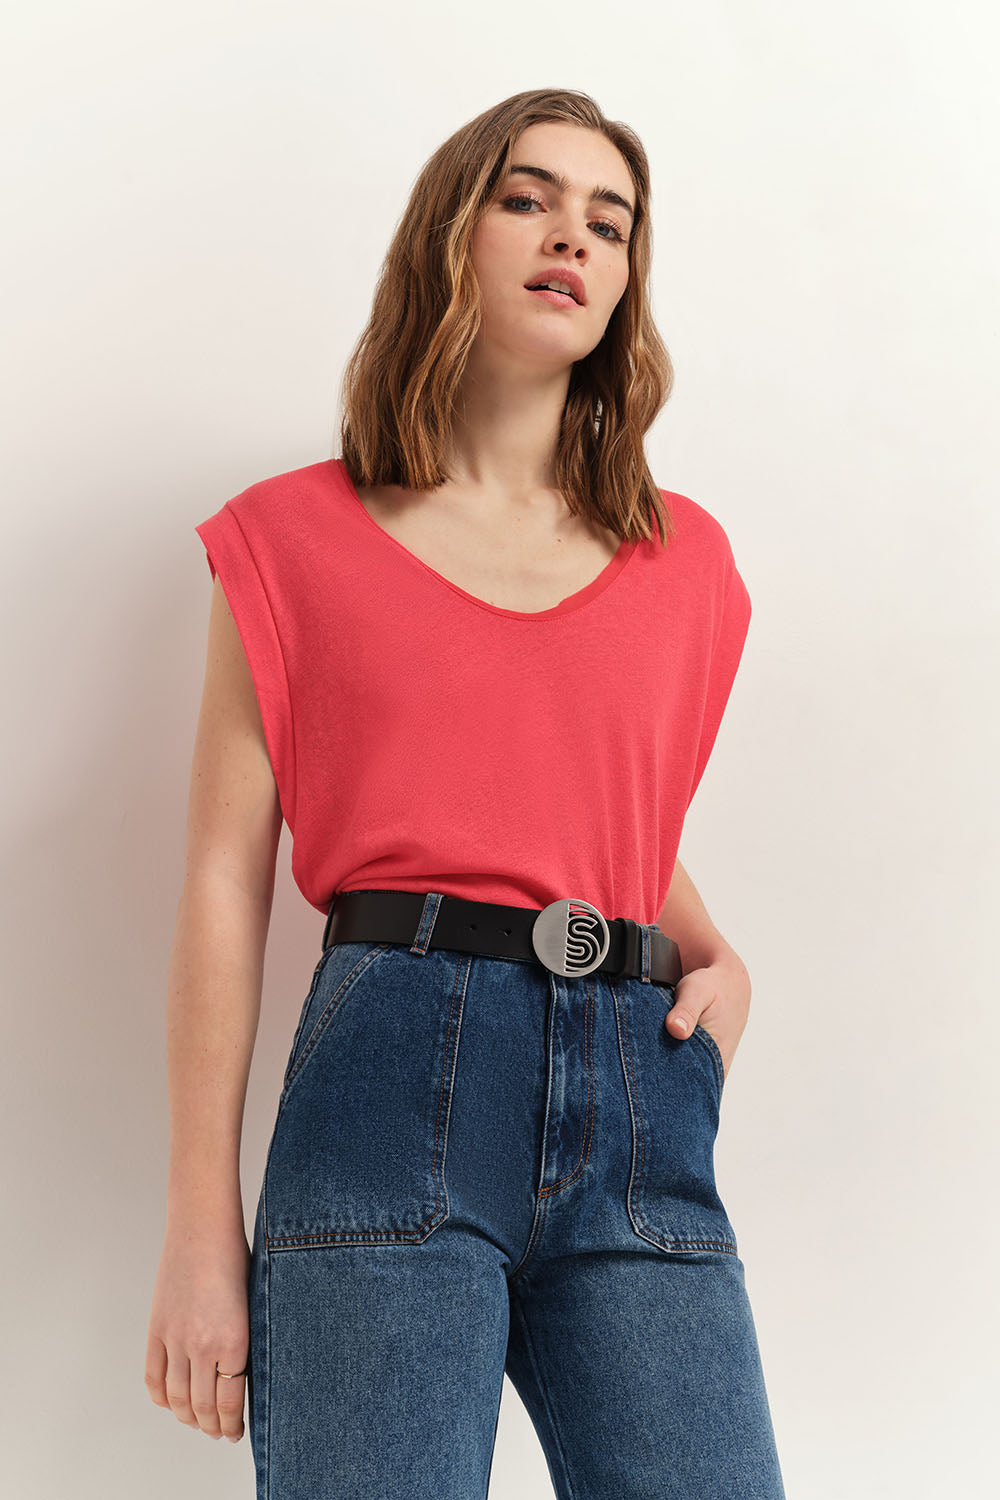 MINEKI - T-shirt hibiscus maille coton lin